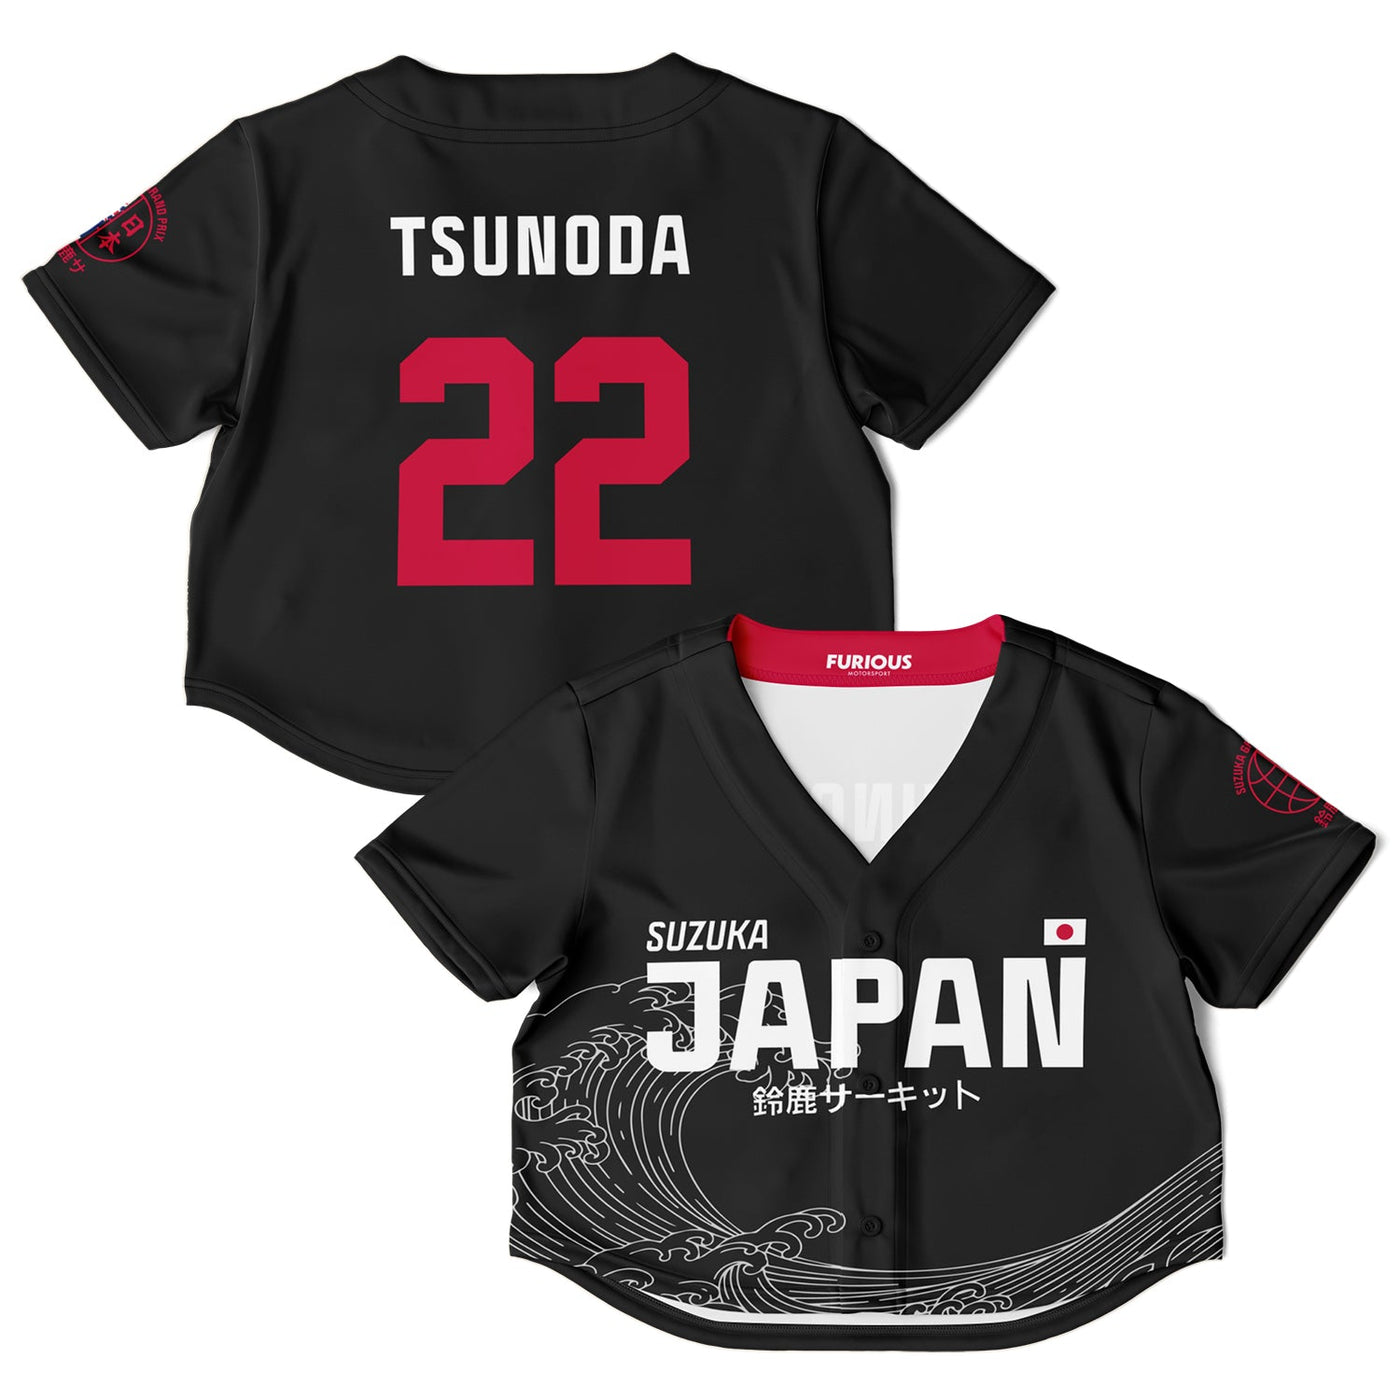 Tsunoda - Carbon Black Suzuka "Great Wave" Crop Top - Furious Motorsport